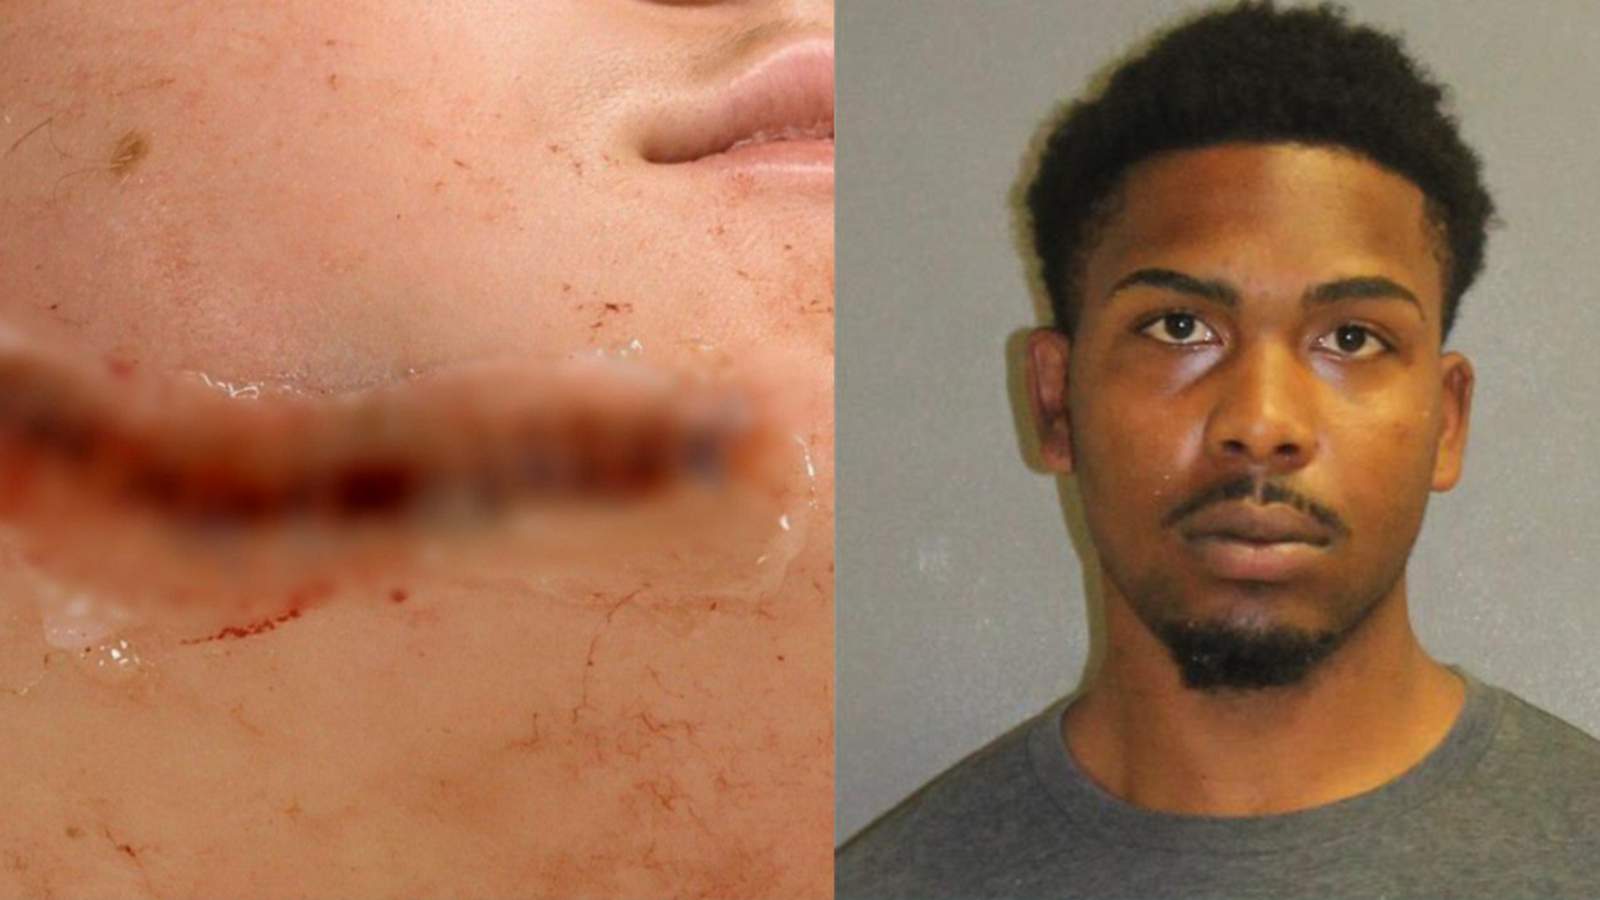 Arrest made in random face-slashing attack that left teen injured in Orange City